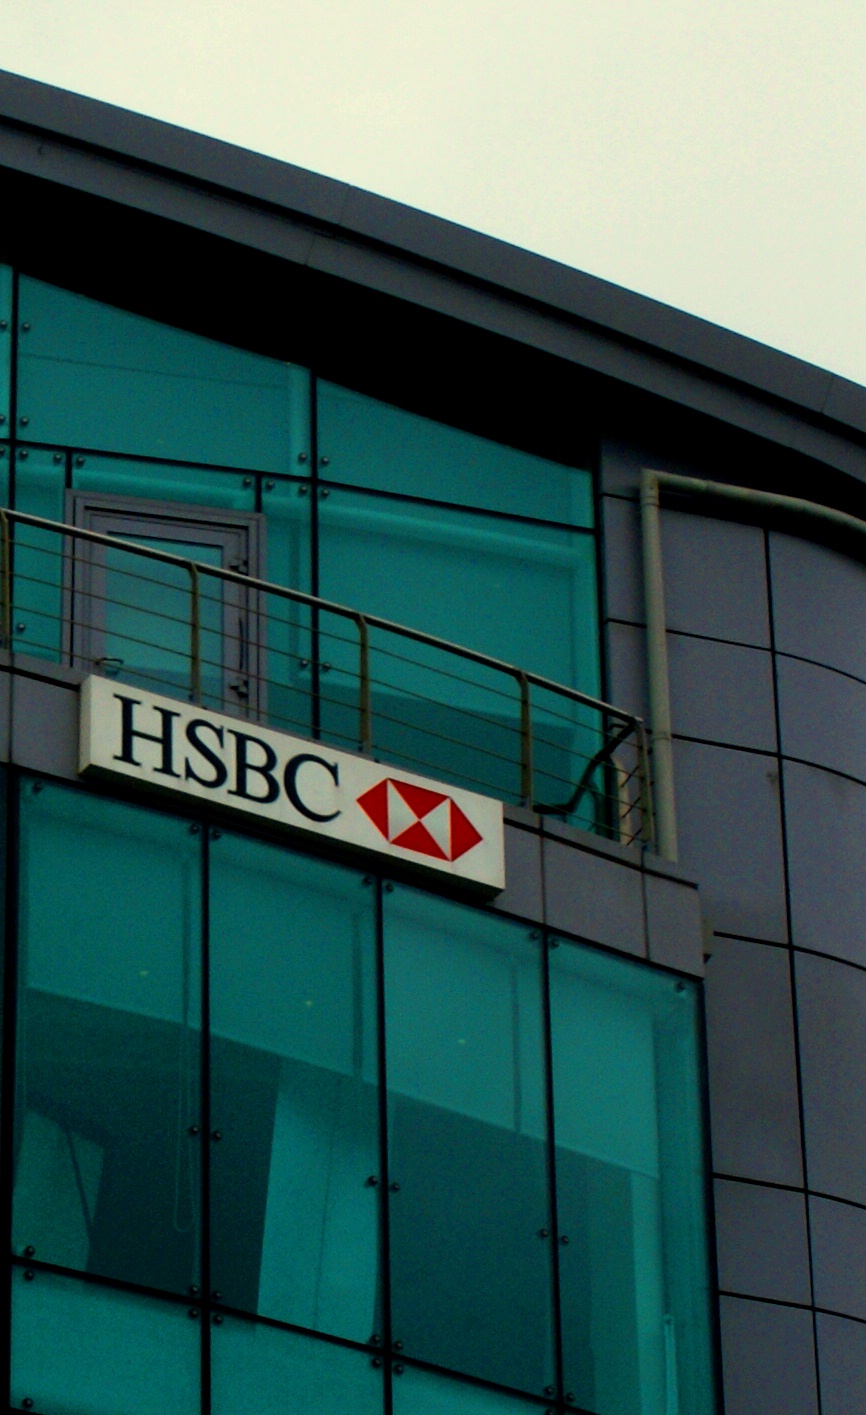 HSBC: under investigation - again!